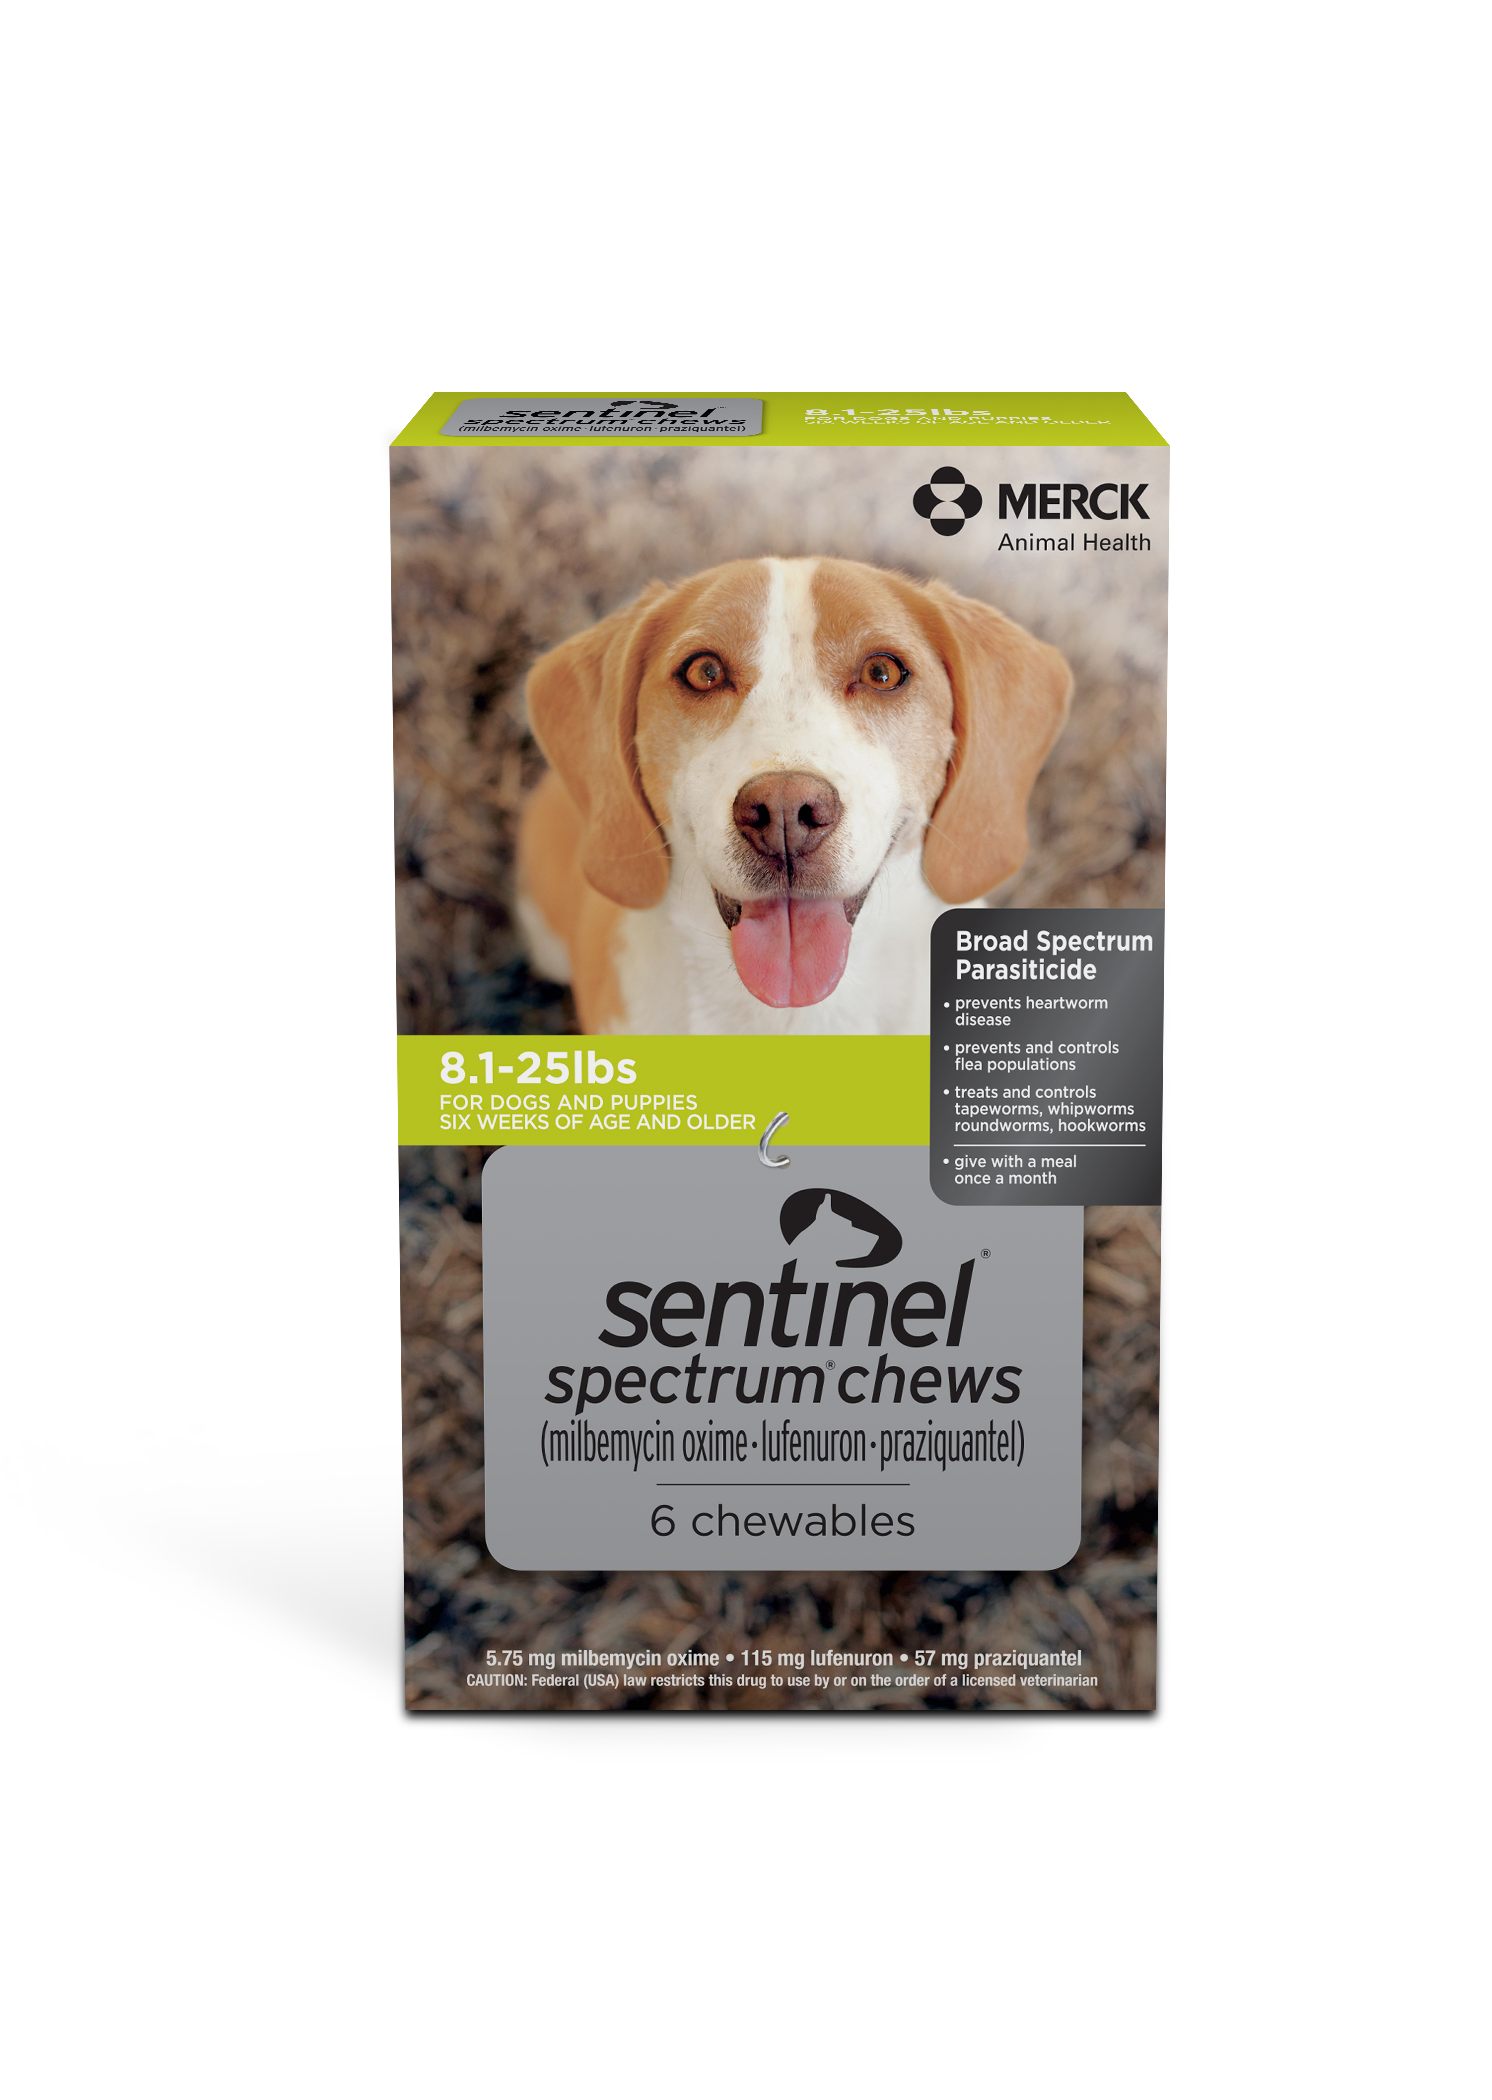 SENTINEL SPECTRUM CHEWS | Merck Animal Health USA